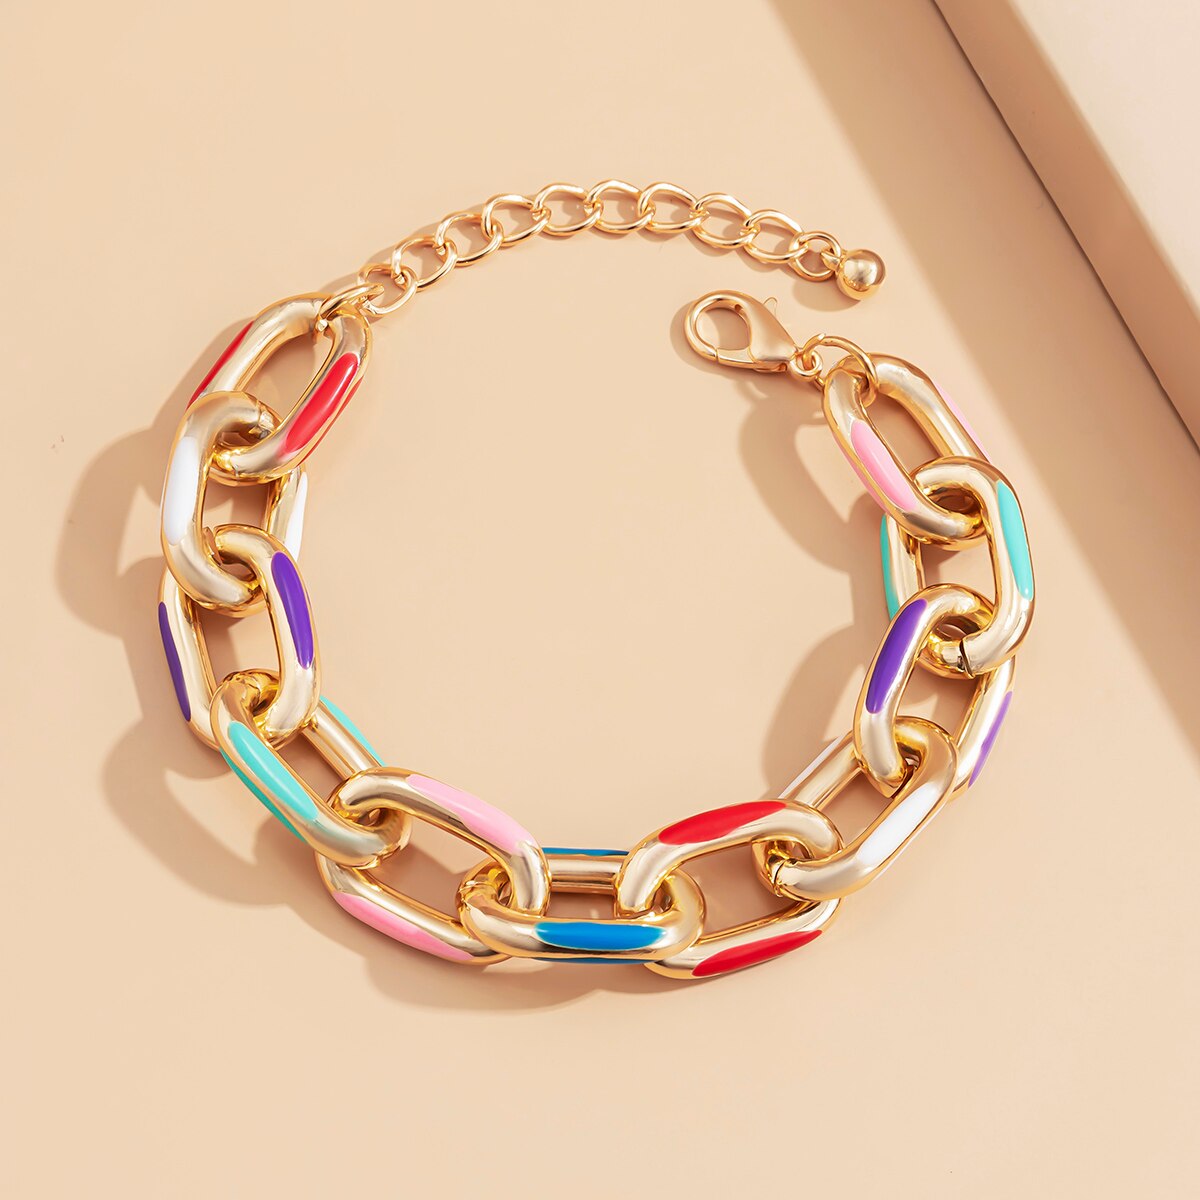 Bohemian beautiful bracelet and chain